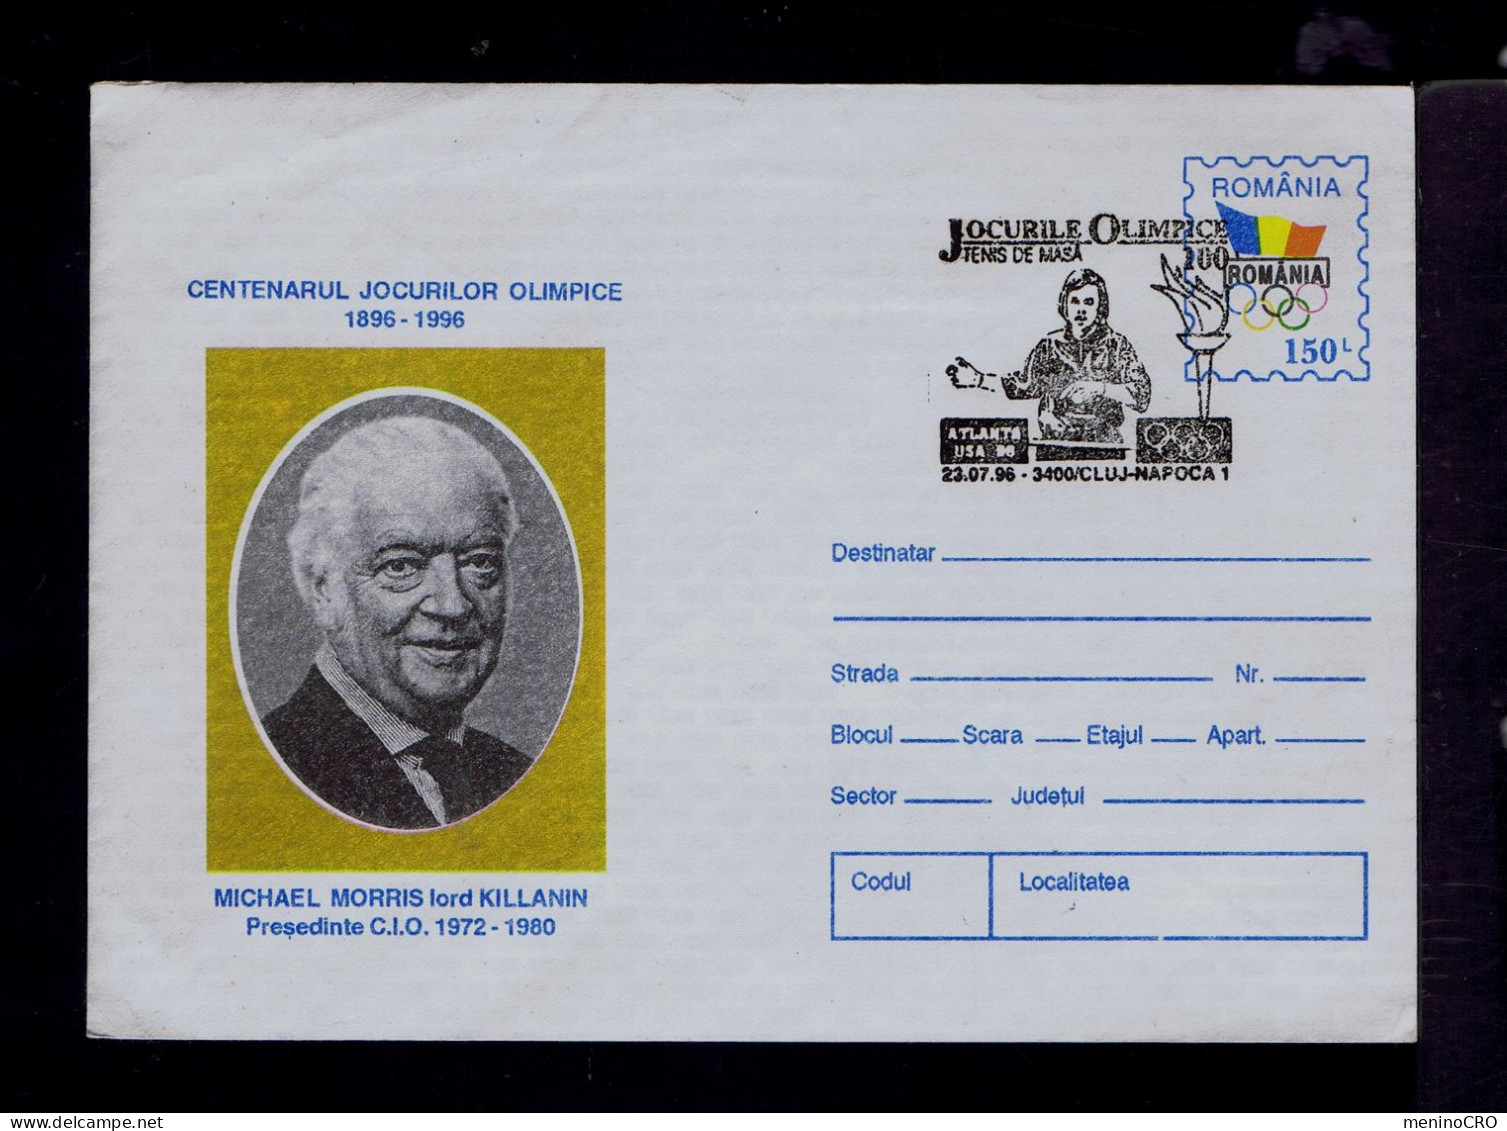 Gc8326 ROMANIA "M. MORRIS Lord KILLANIN" Cover Postal Stationery /1896-1996 JUCURILOR OLIMPIC Pres.1972/80 Atlanta USA - Table Tennis